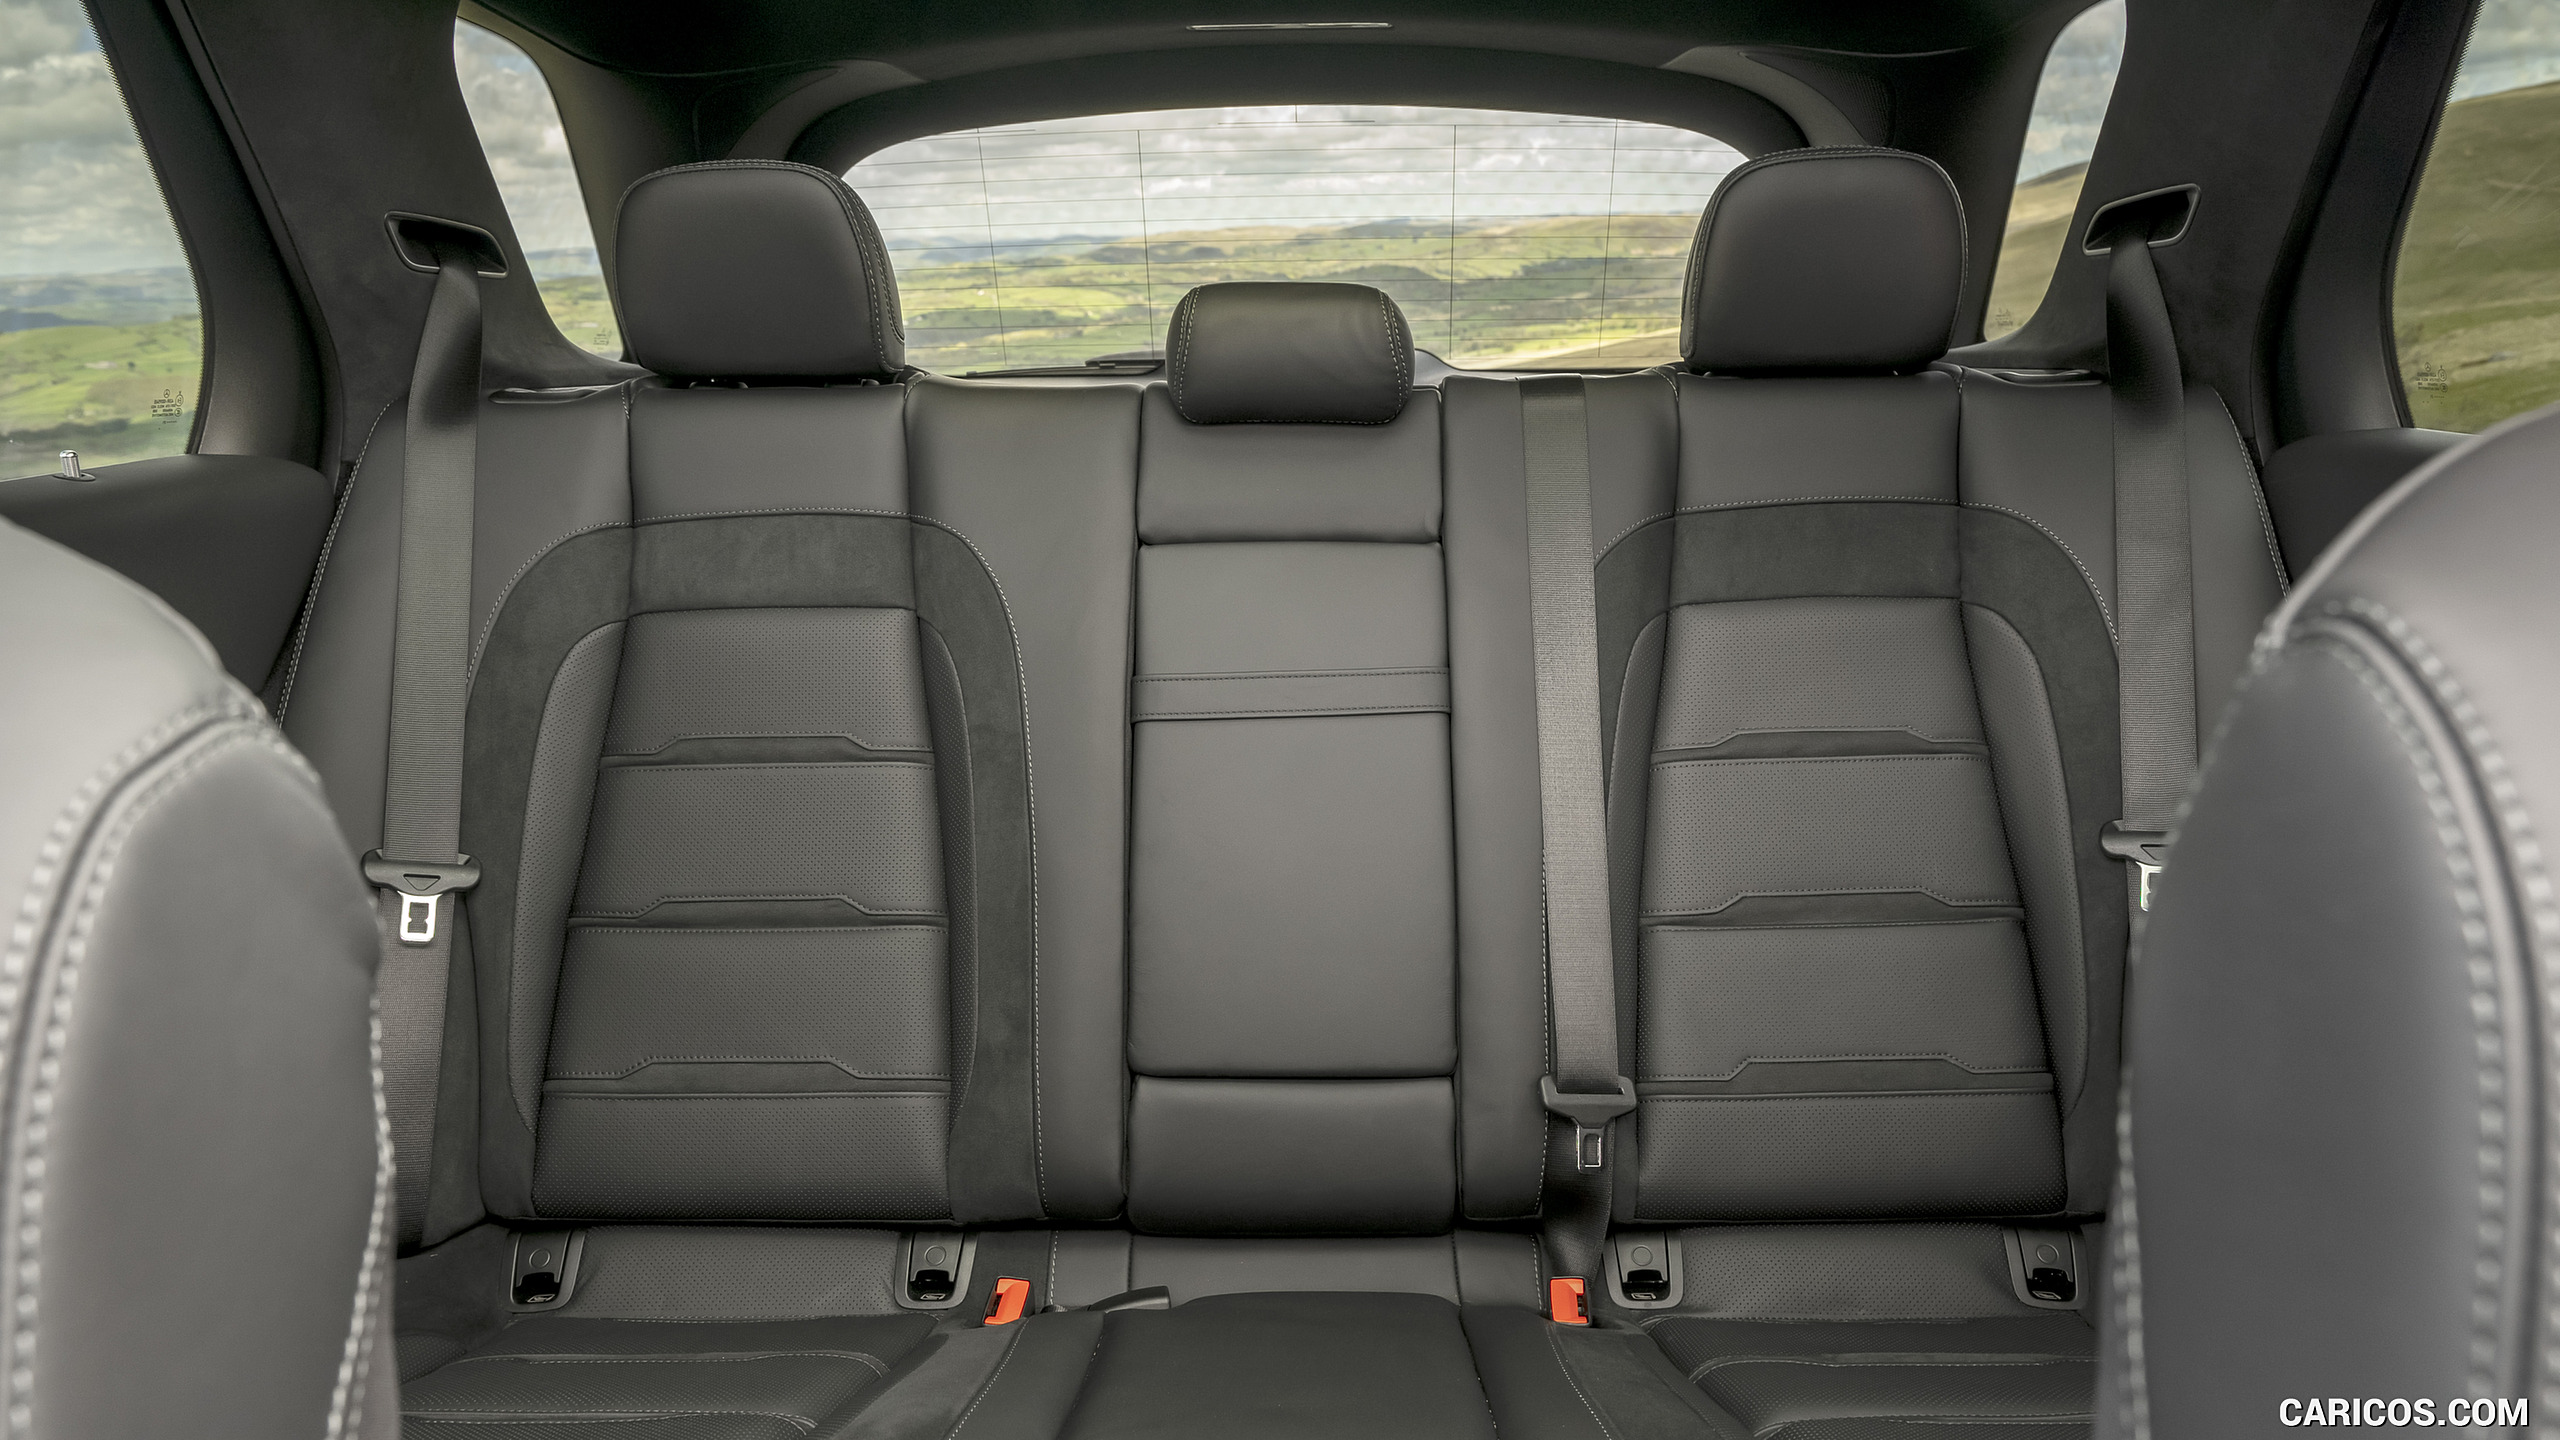 2021 Mercedes-AMG GLE 63 S 4MATIC (UK-Spec) - Interior, Rear Seats, #180 of 187